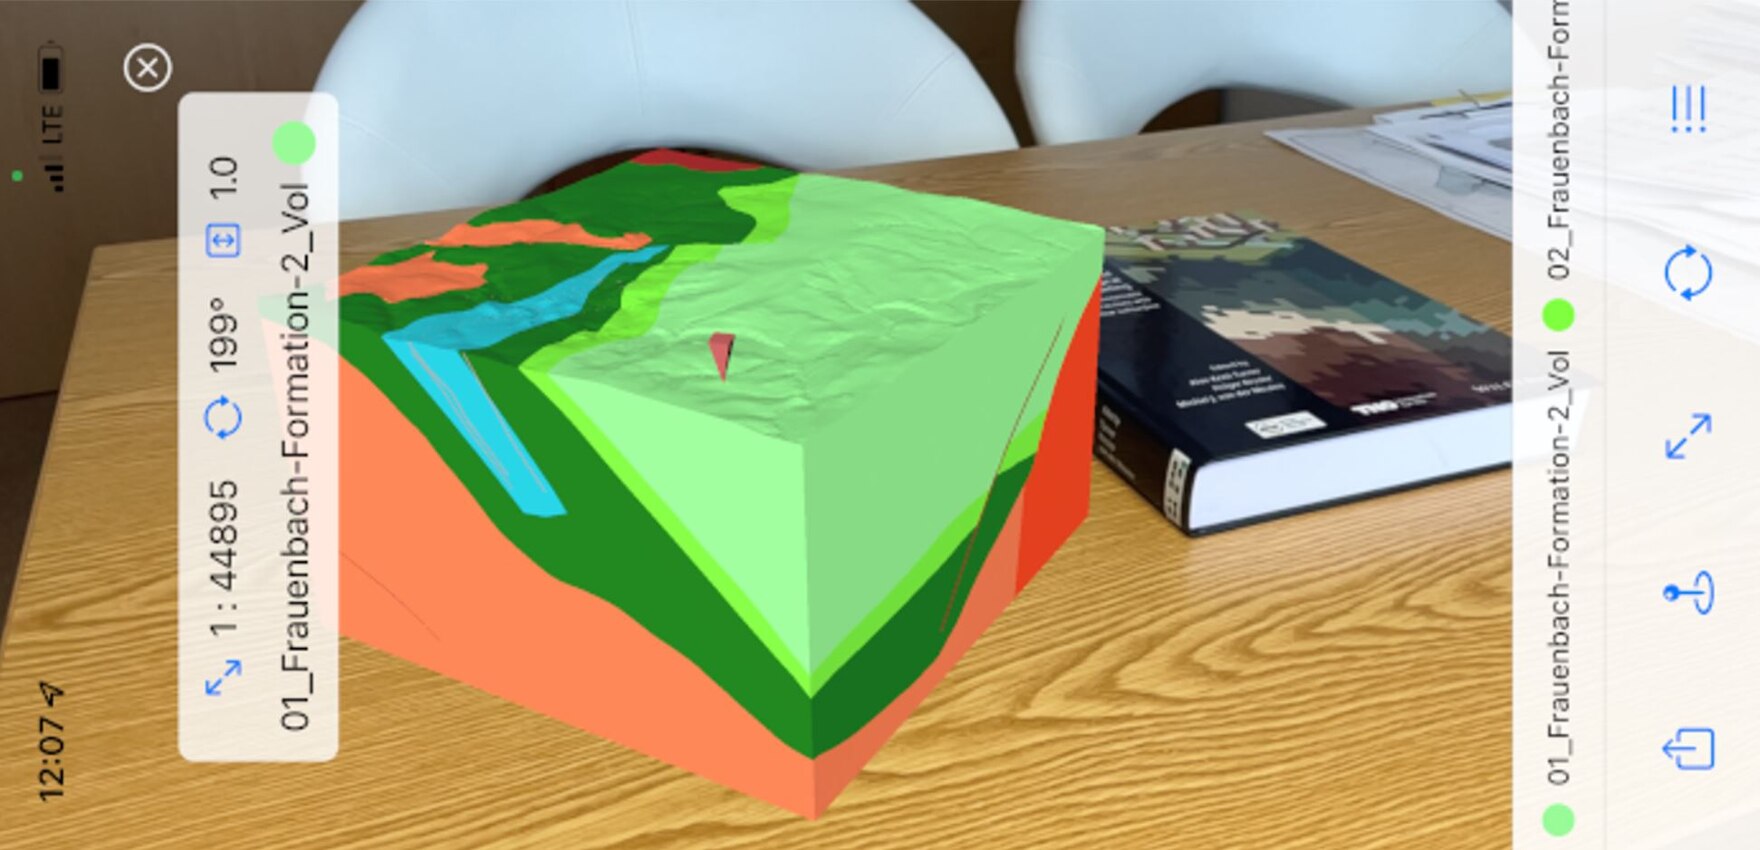 3D-Modell Schneeberg als Augmented Realilty in die Umgebung projiziert